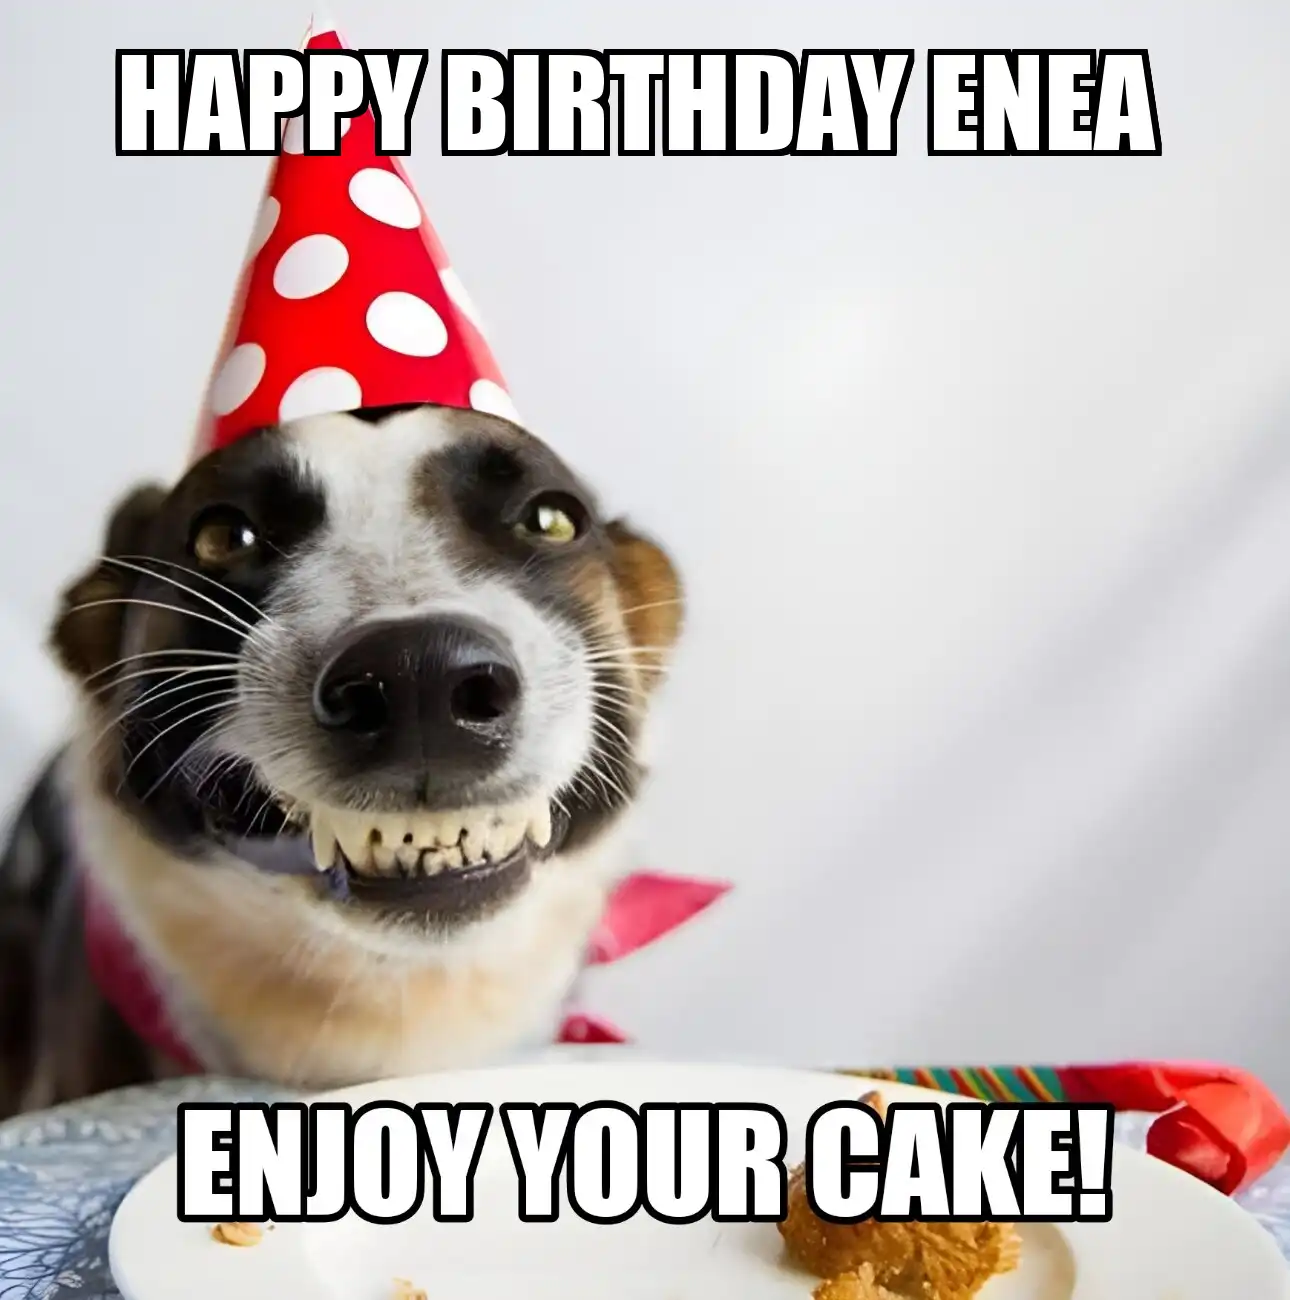 Happy Birthday Enea Enjoy Your Cake Dog Meme